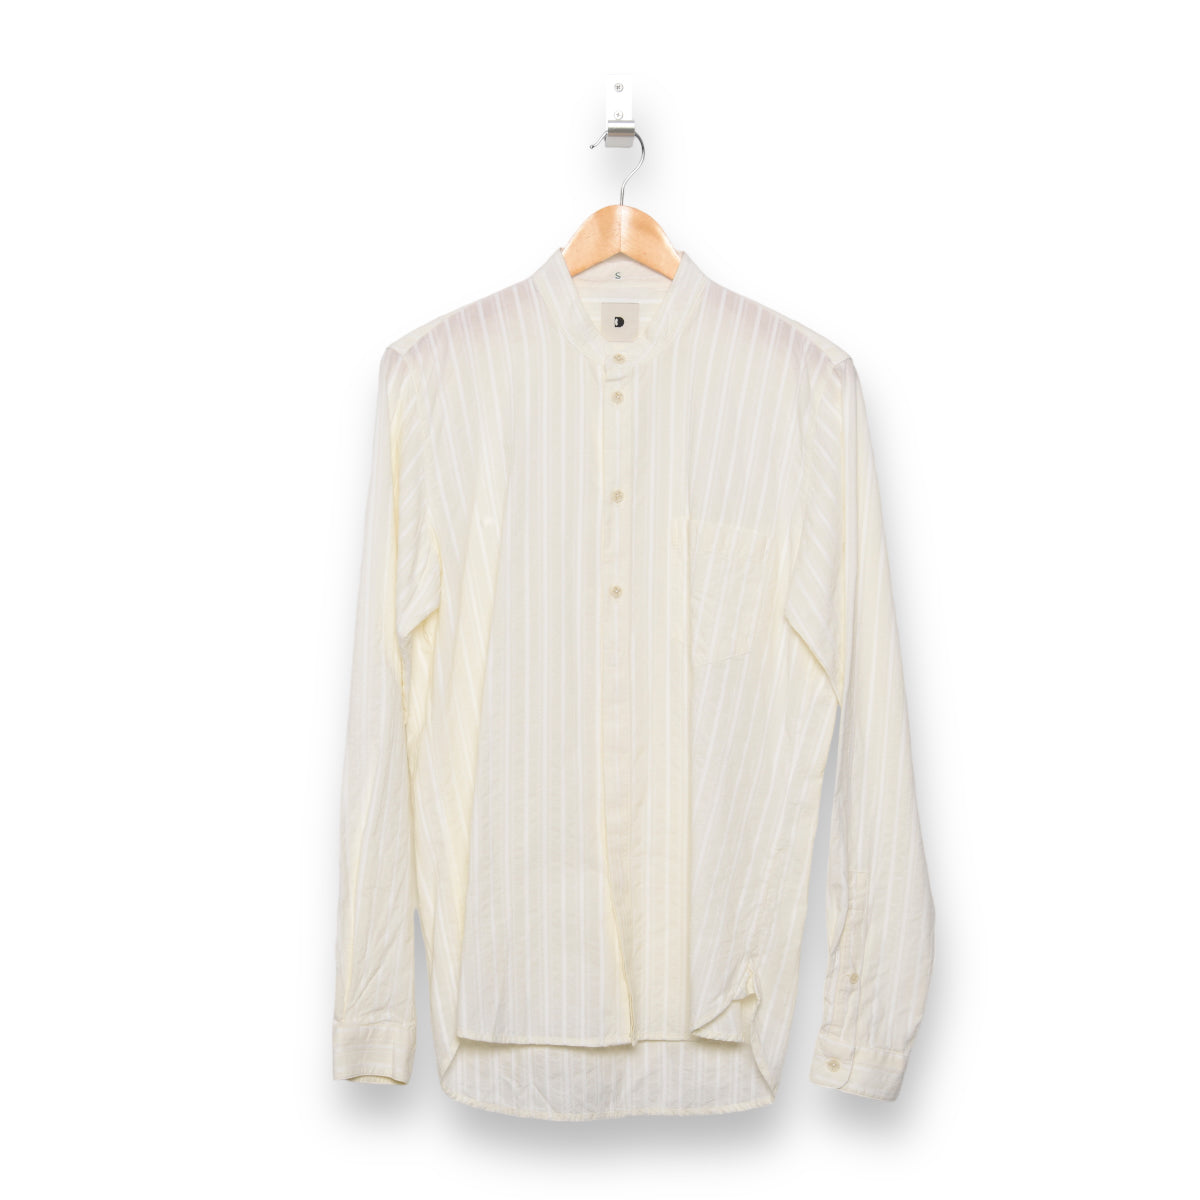 Delikatessen Zen Shirt stripe white jacquard